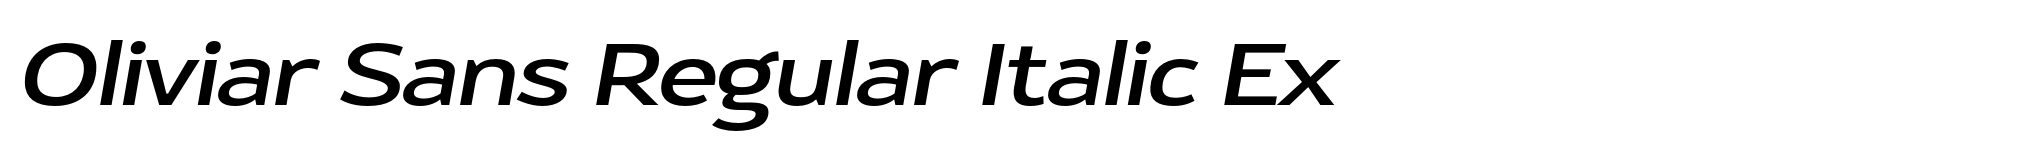 Oliviar Sans Regular Italic Ex image